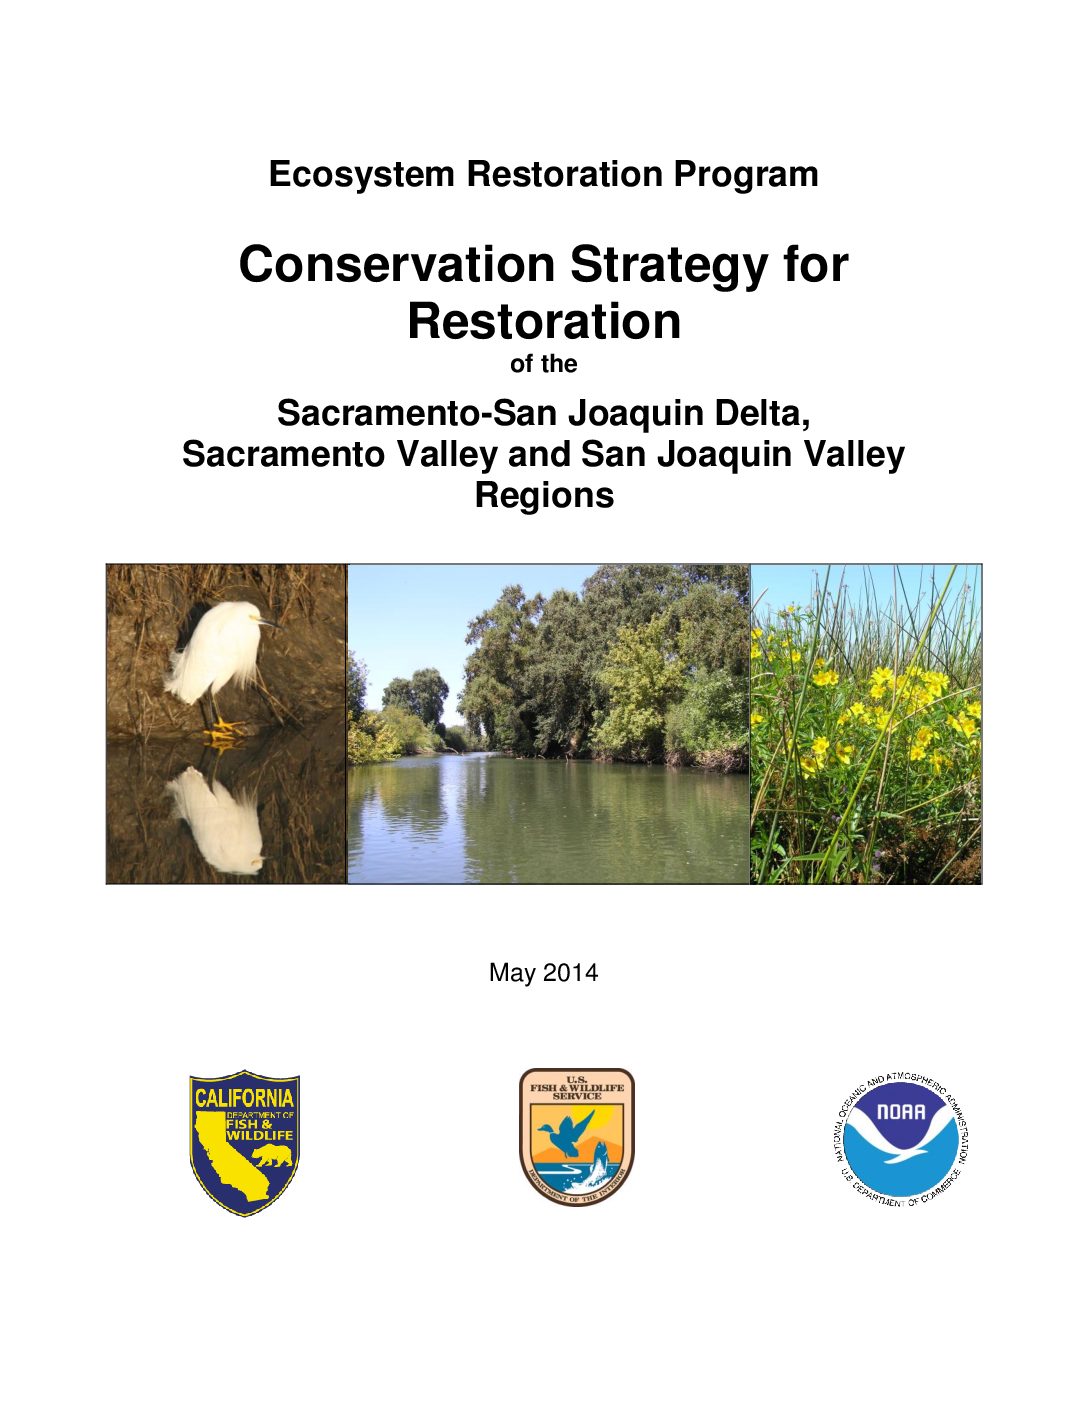 Conservation Strategy for Restoration of the Sacramento-San Joaquin Delta, Sacramento Valley and San Joaquin Valley Regions